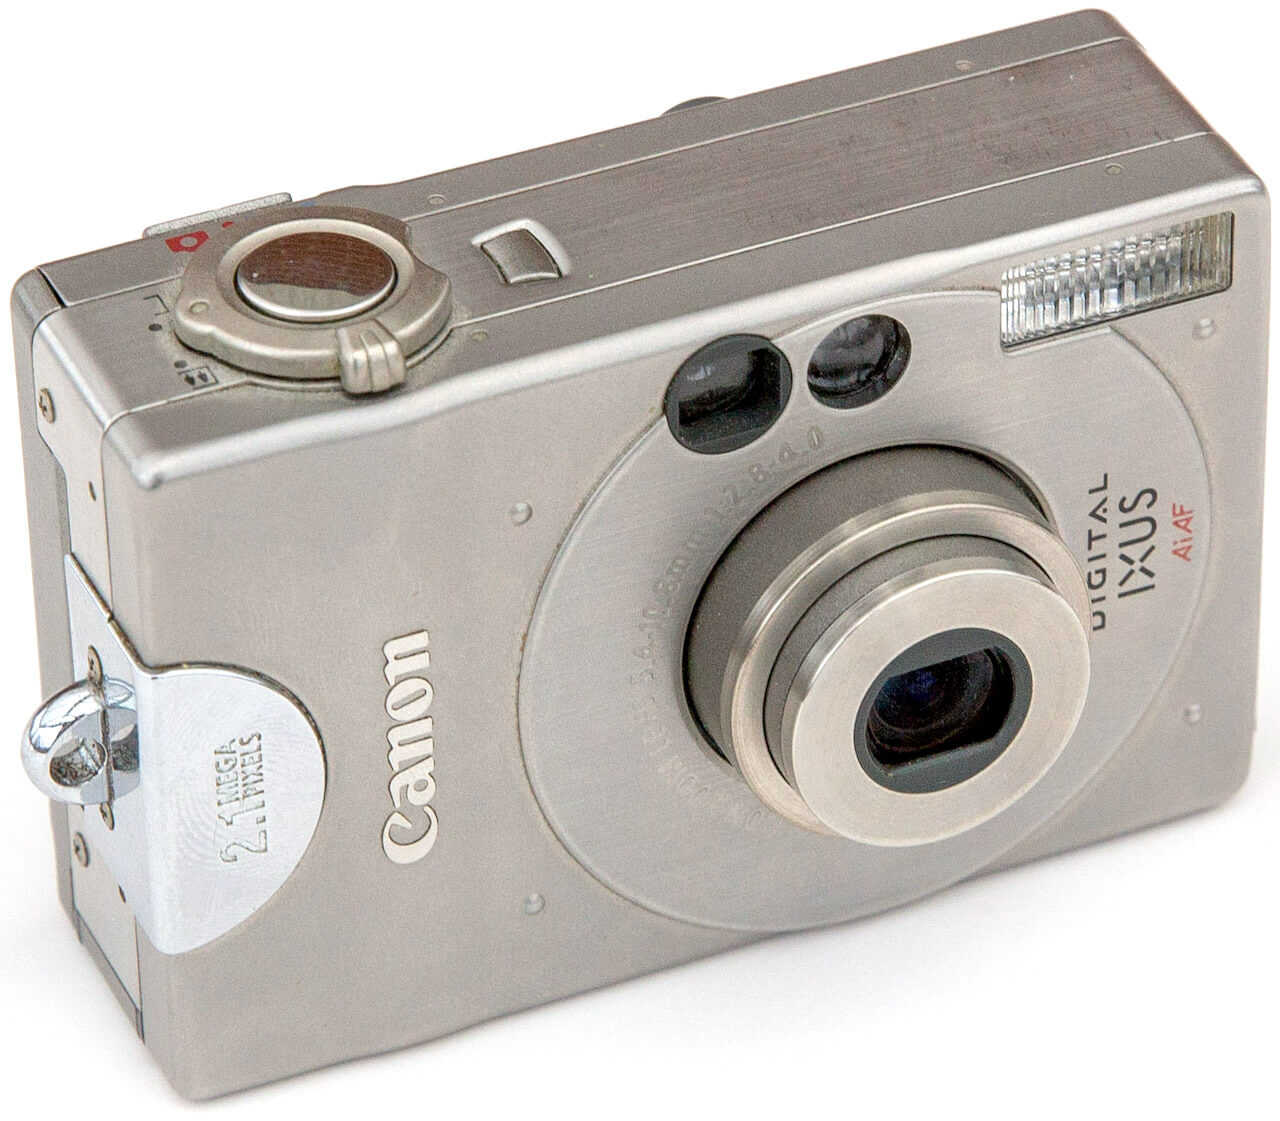 My first digital camera, the Canon Digital Ixus. (89-66)